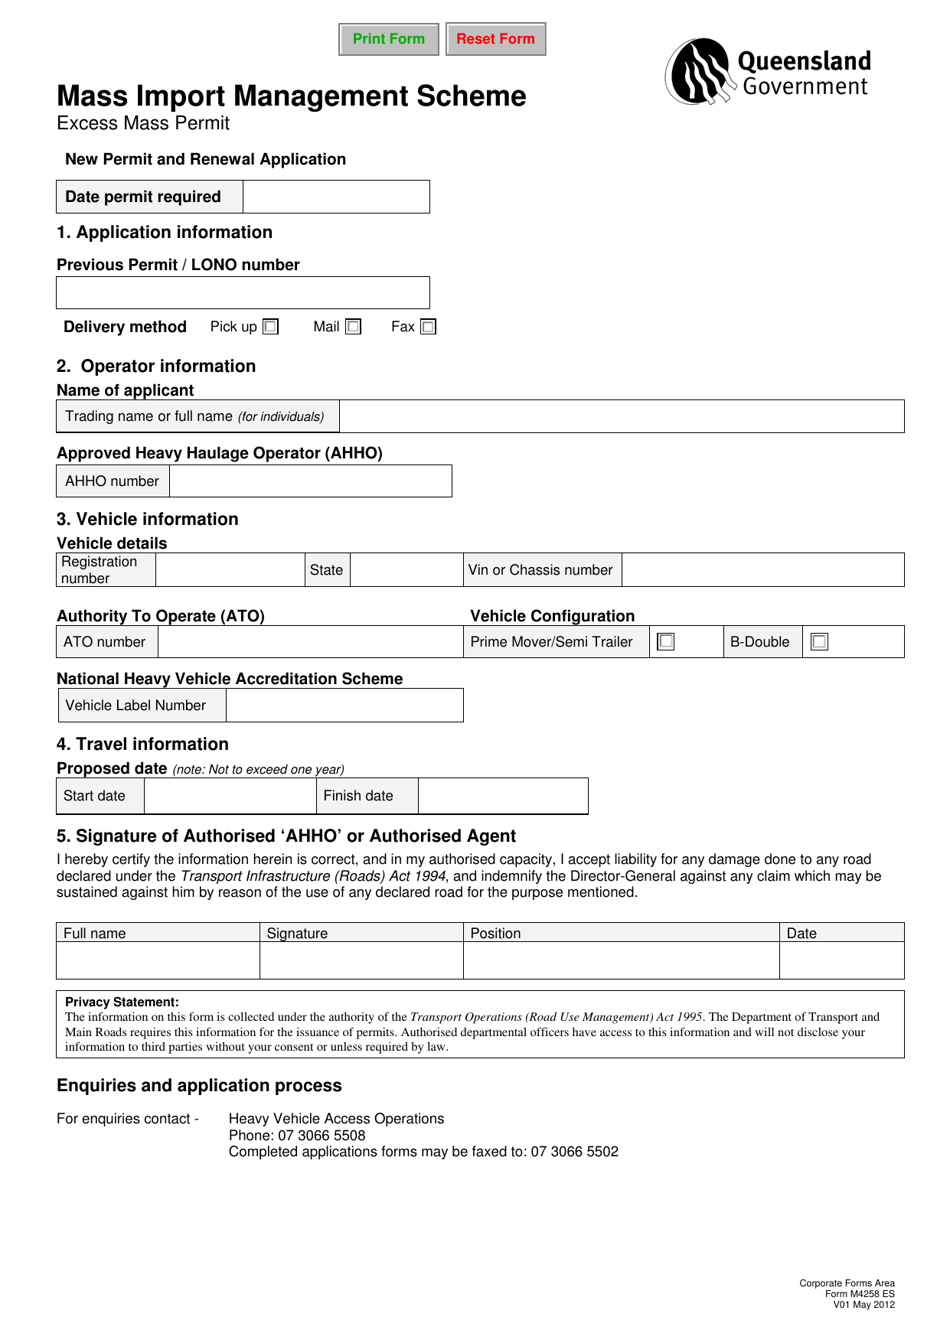 Form M4258 Mass Import Management Scheme - Queensland, Australia, Page 1